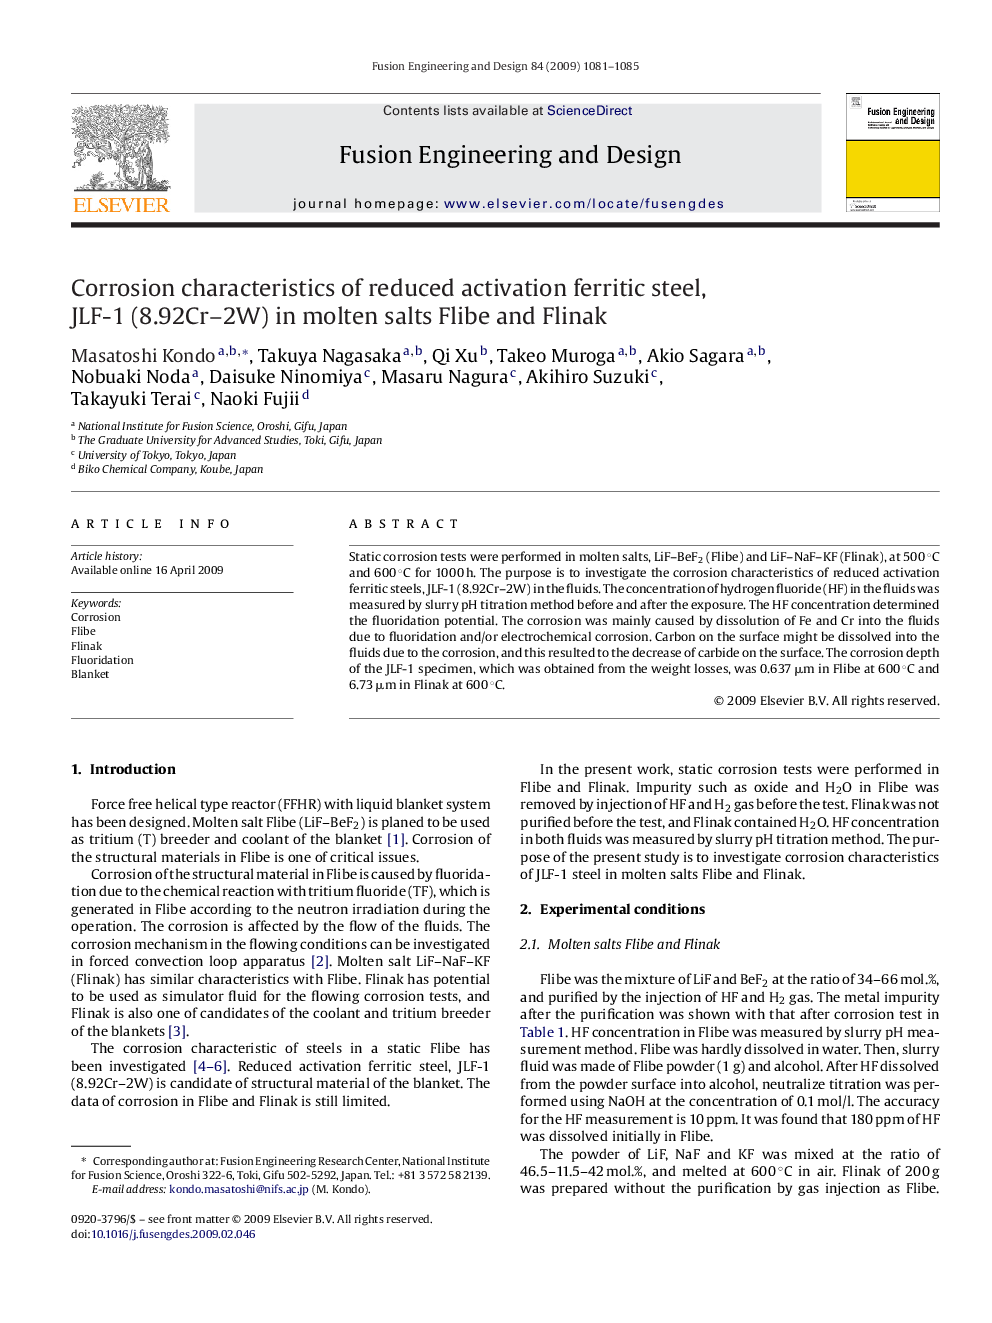 Corrosion characteristics of reduced activation ferritic steel, JLF-1 (8.92Cr–2W) in molten salts Flibe and Flinak